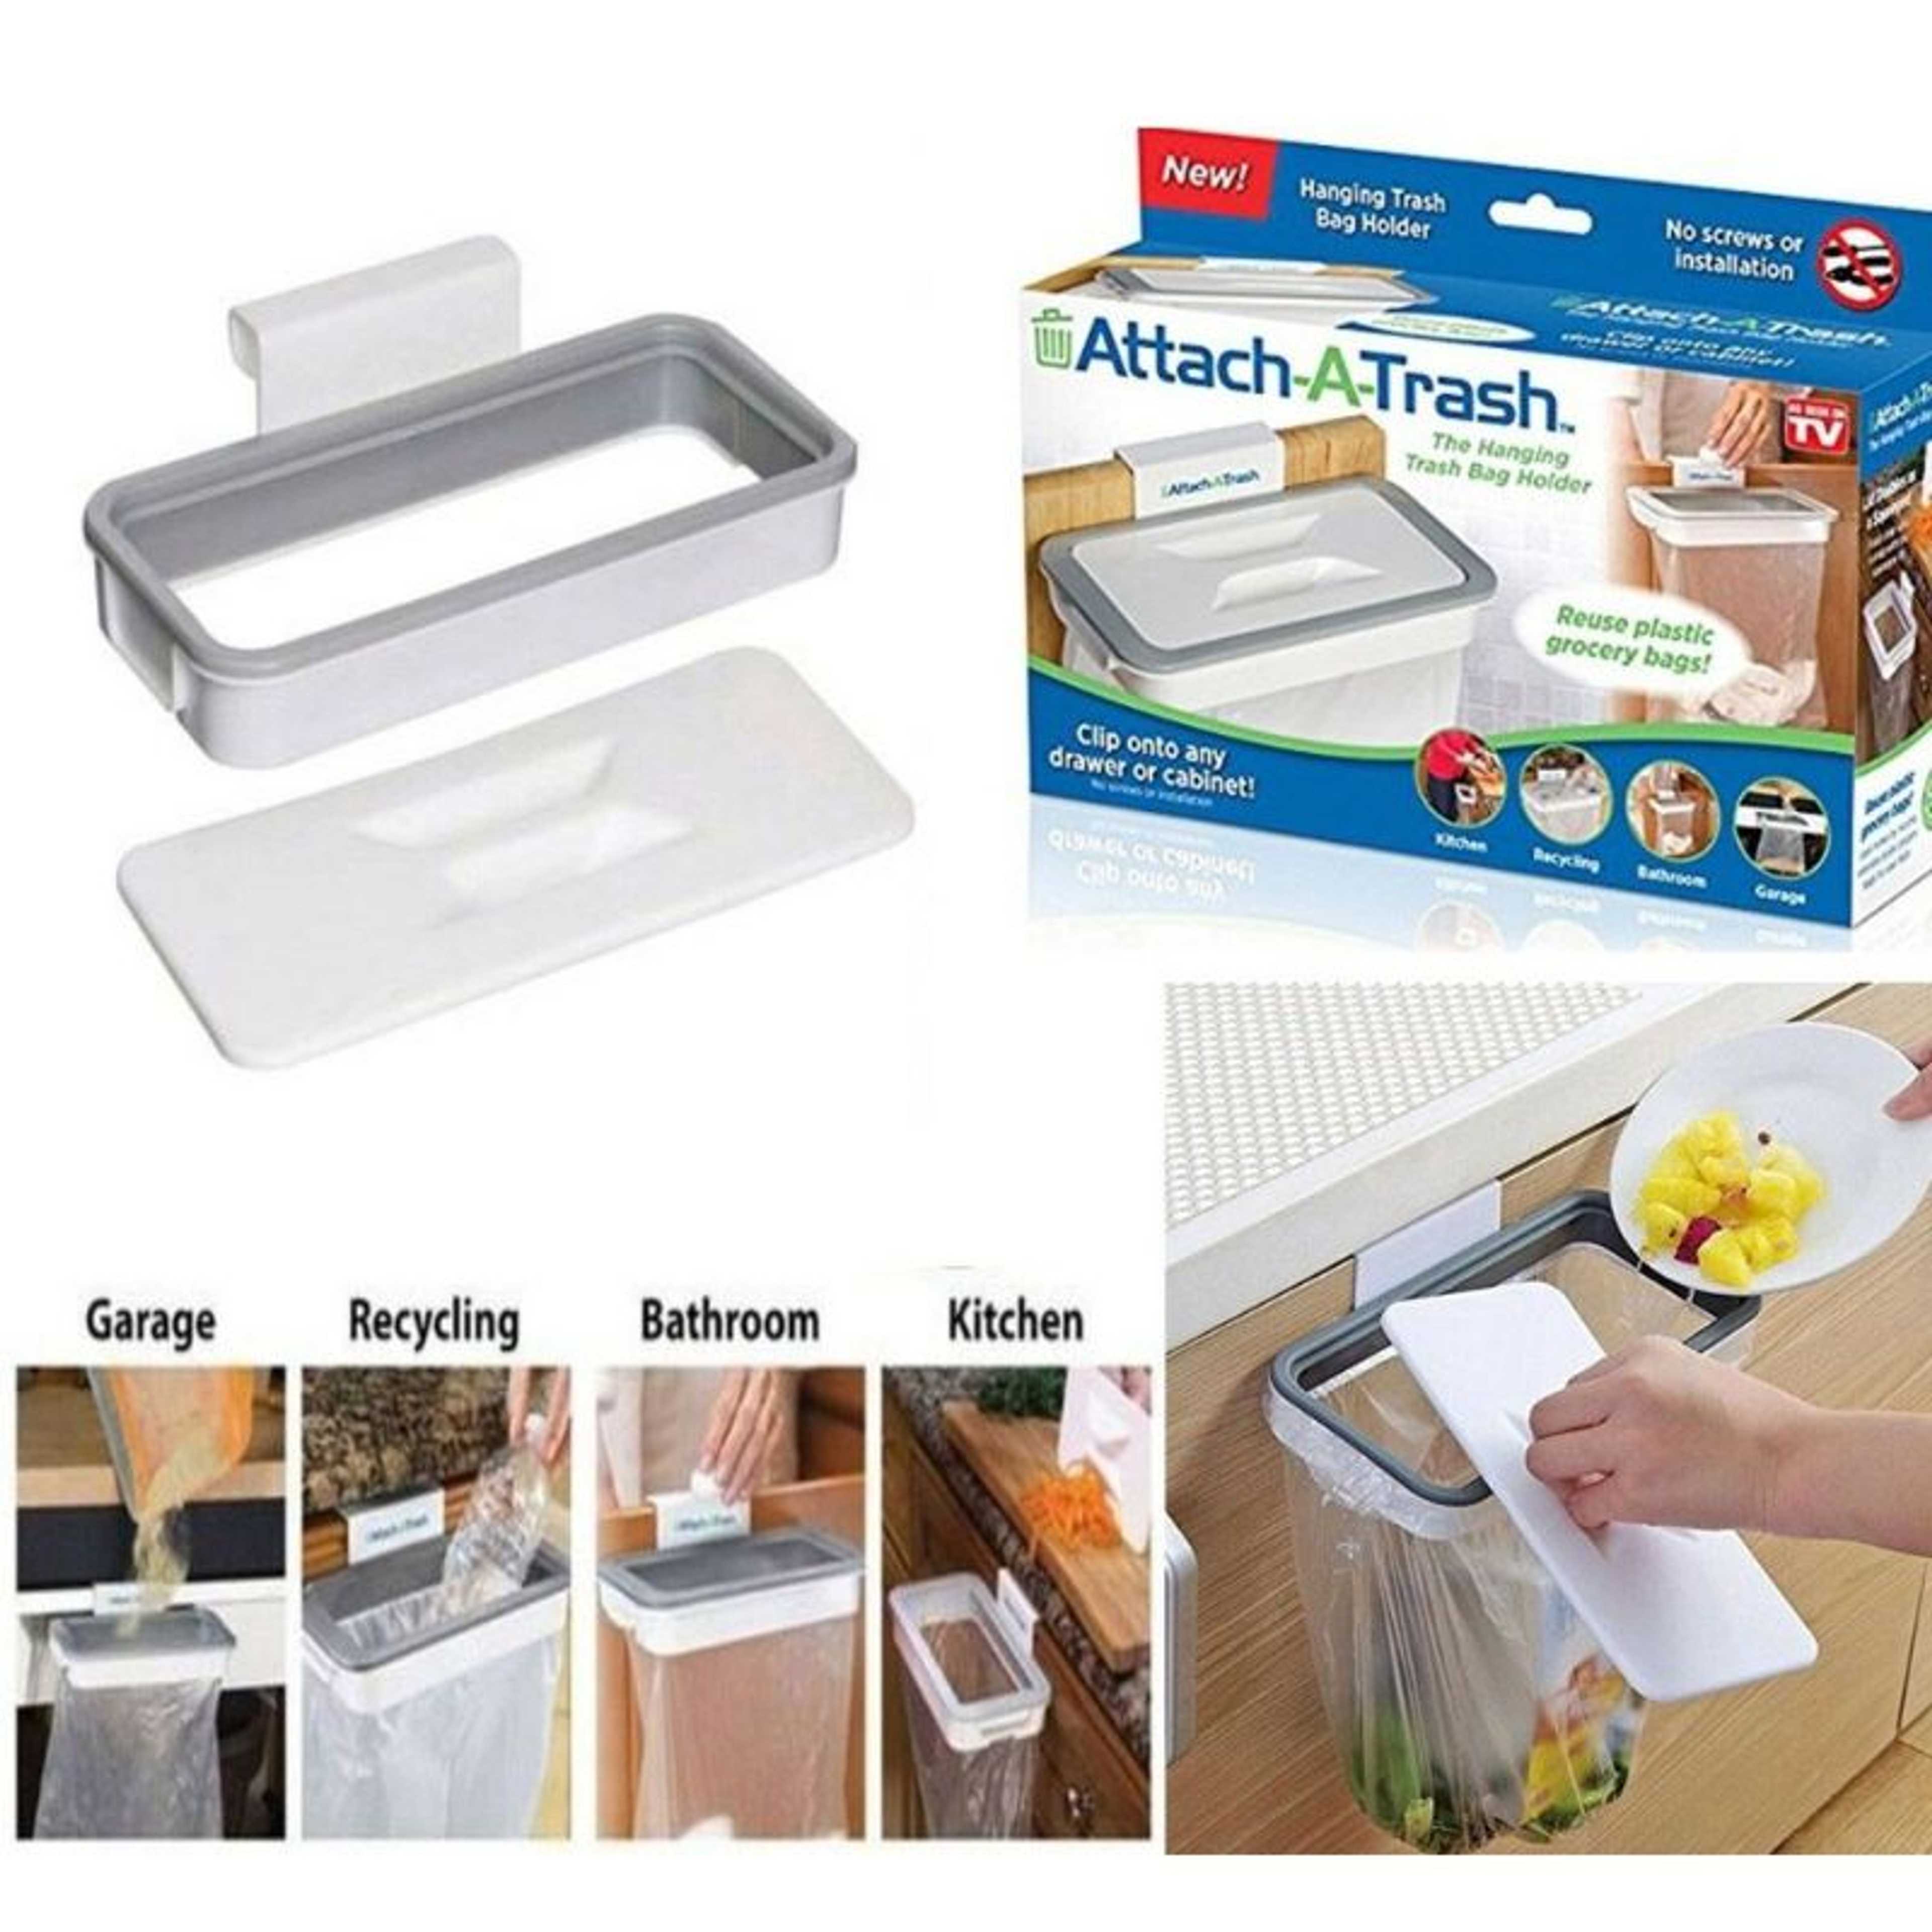 Hanging Trash Bag Holder Attach A Trash Recycle Bin Kitchen Cabinet Garbage Dustbin Waste Bin